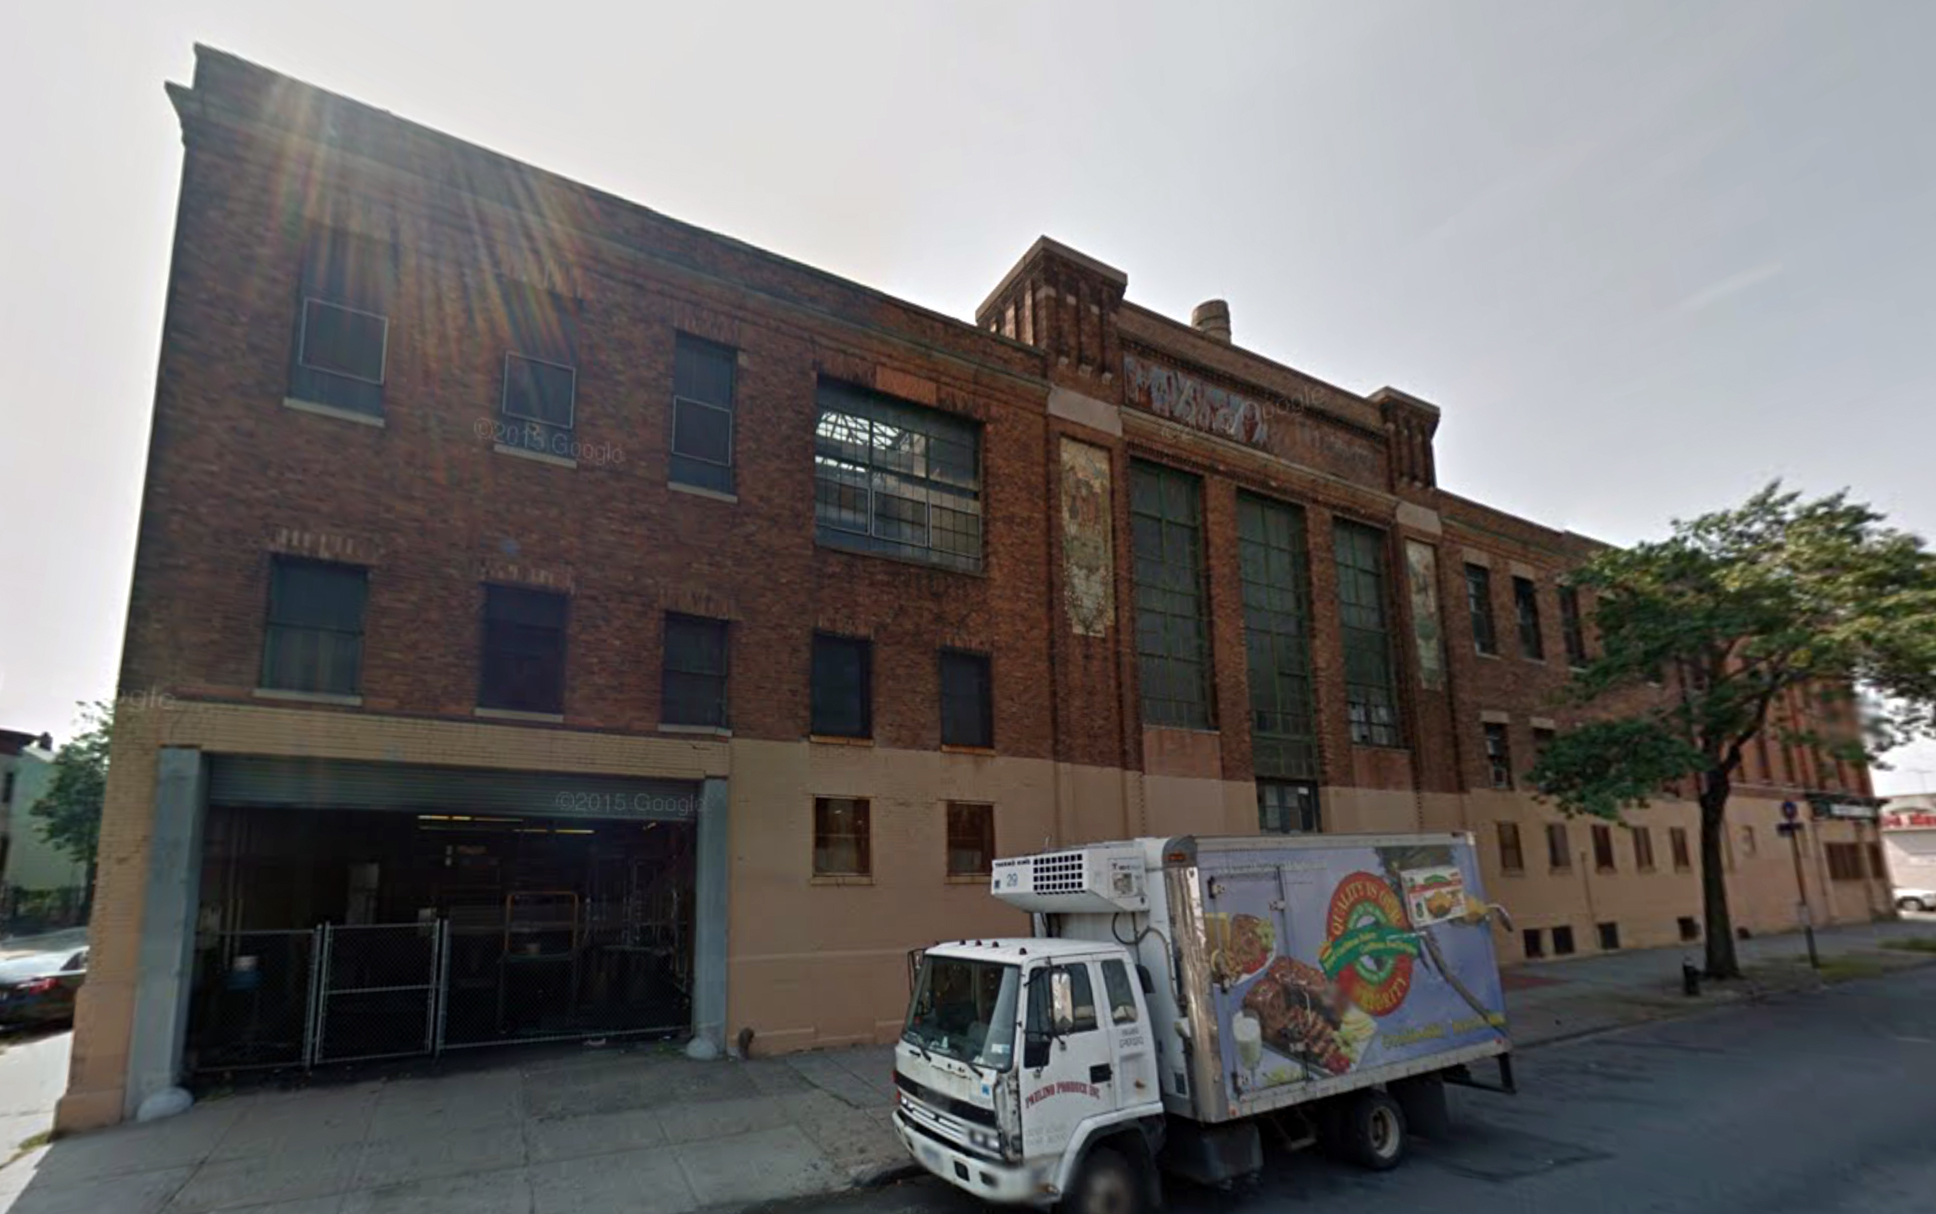 Empire State Dairy Co., 2840 Atlantic Avenue, 2013. Via Google Maps